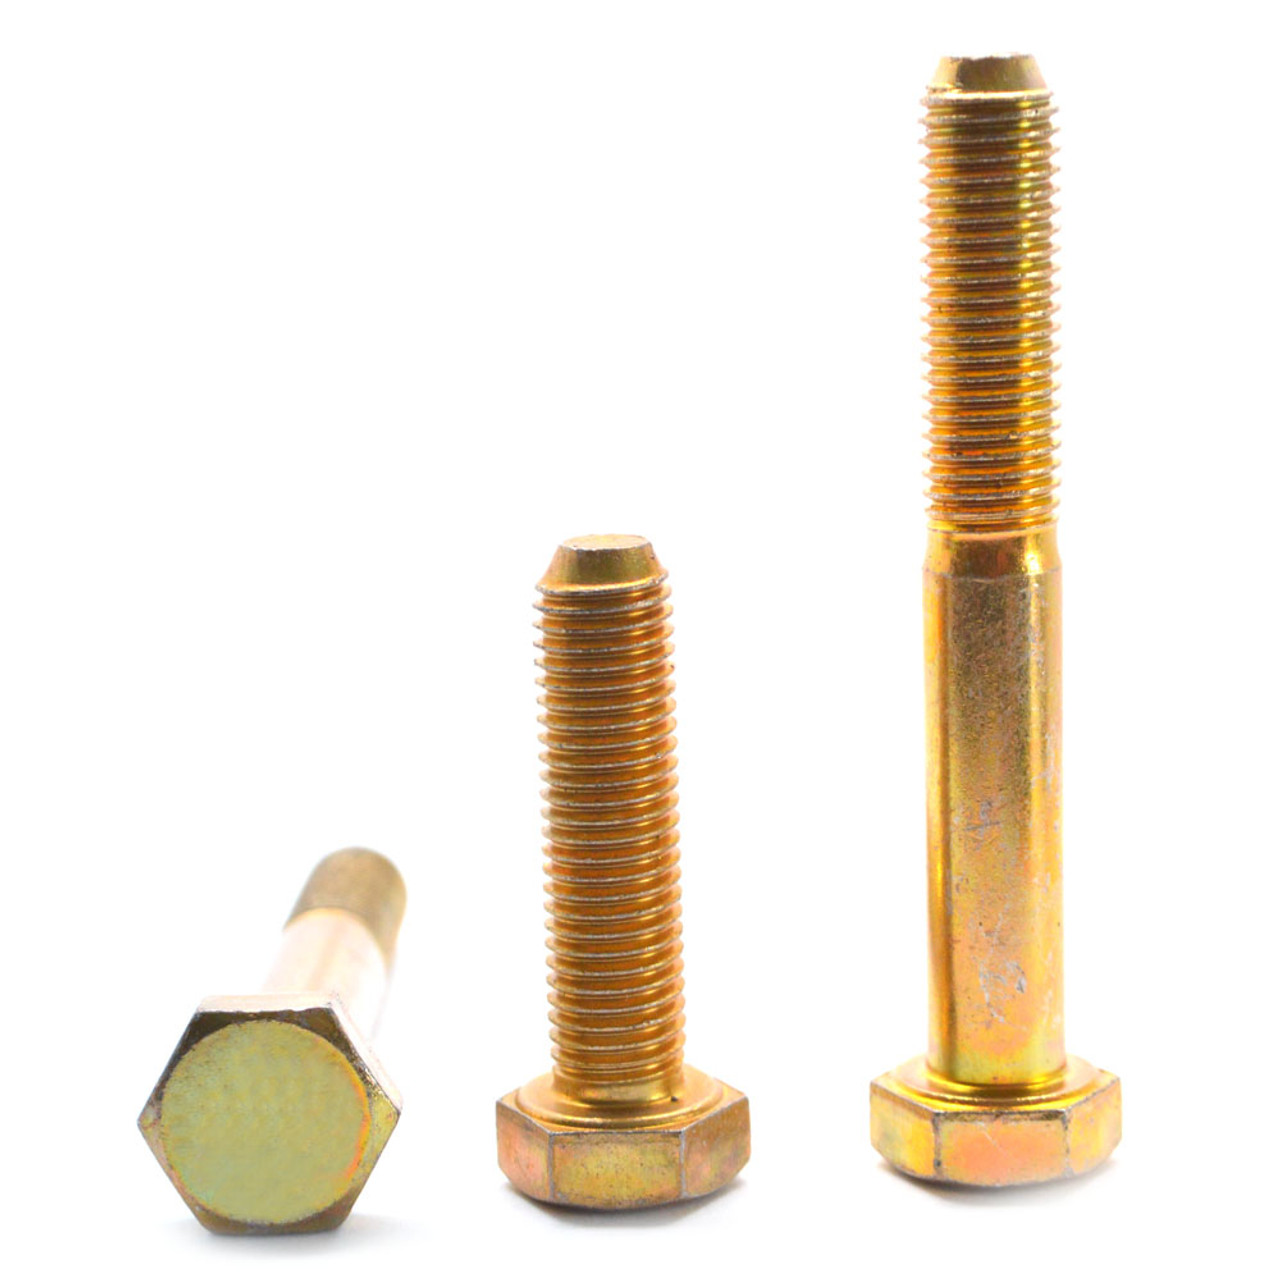 7/16"-14 x 7/8" (FT) Coarse Thread Grade 8 Hex Cap Screw (Bolt) Alloy Steel Yellow Zinc Plated